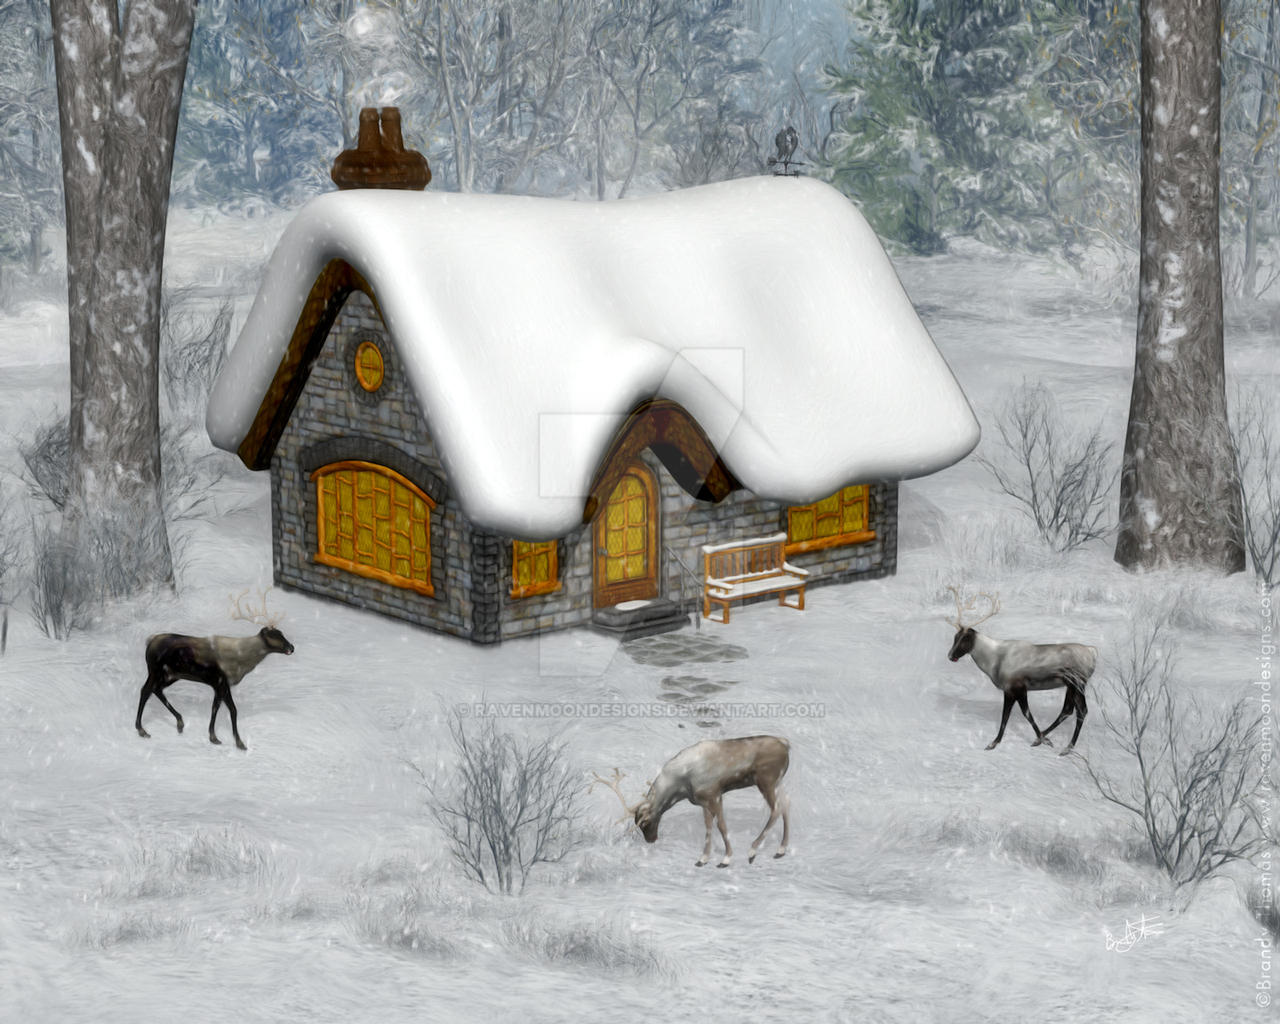 Winter Serenity by RavenMoonDesigns on DeviantArt